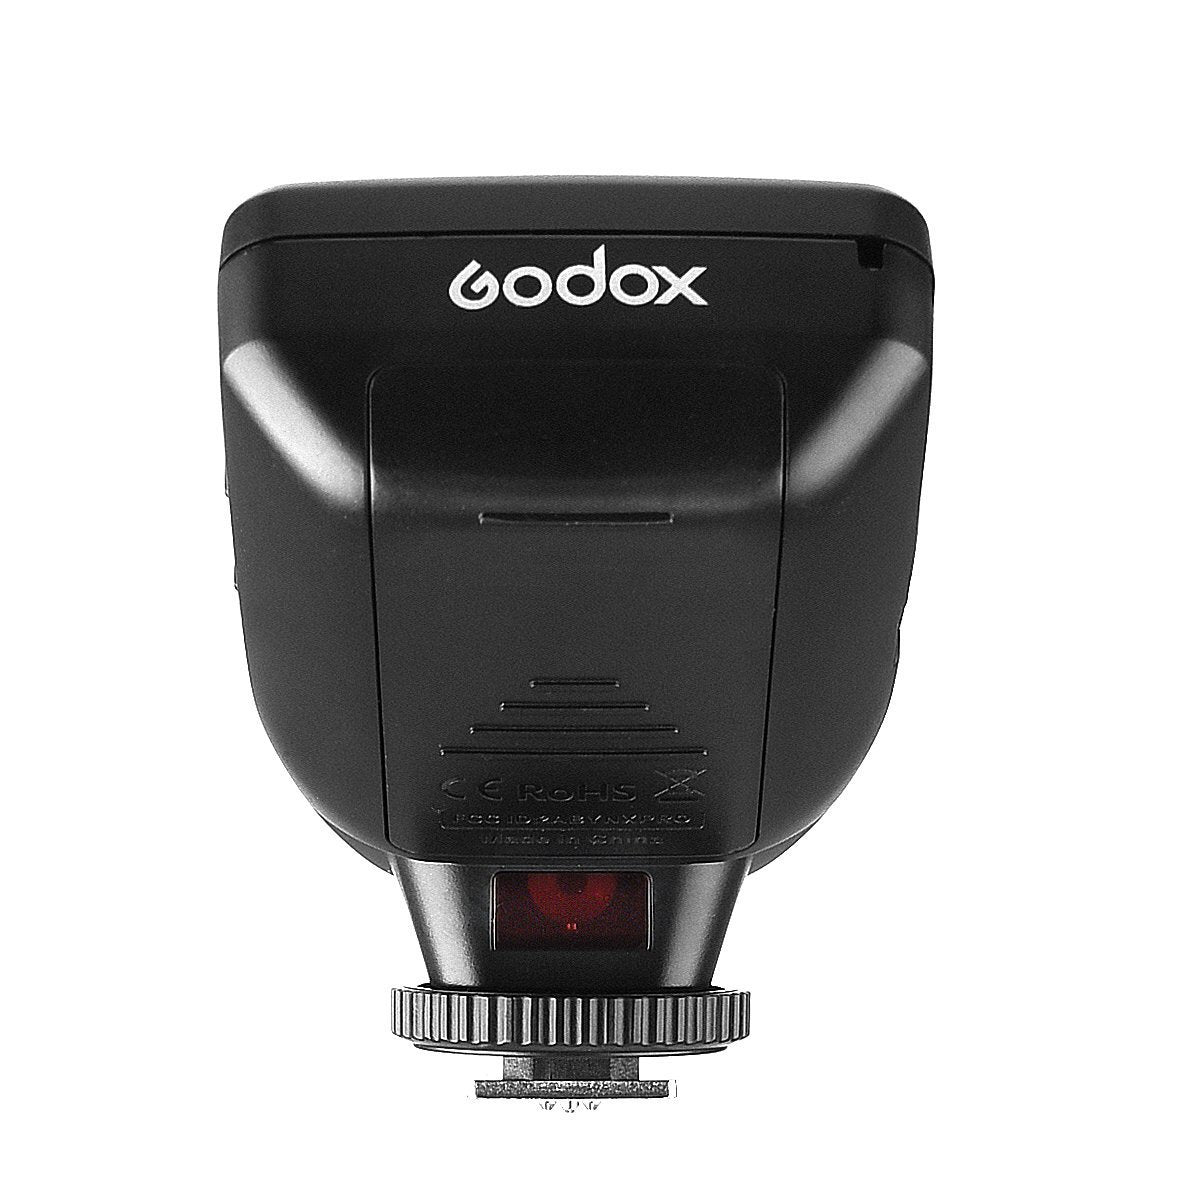 Godox XPRO-N 2.4G Wirless Flash Trigger Transmitter for Nikon